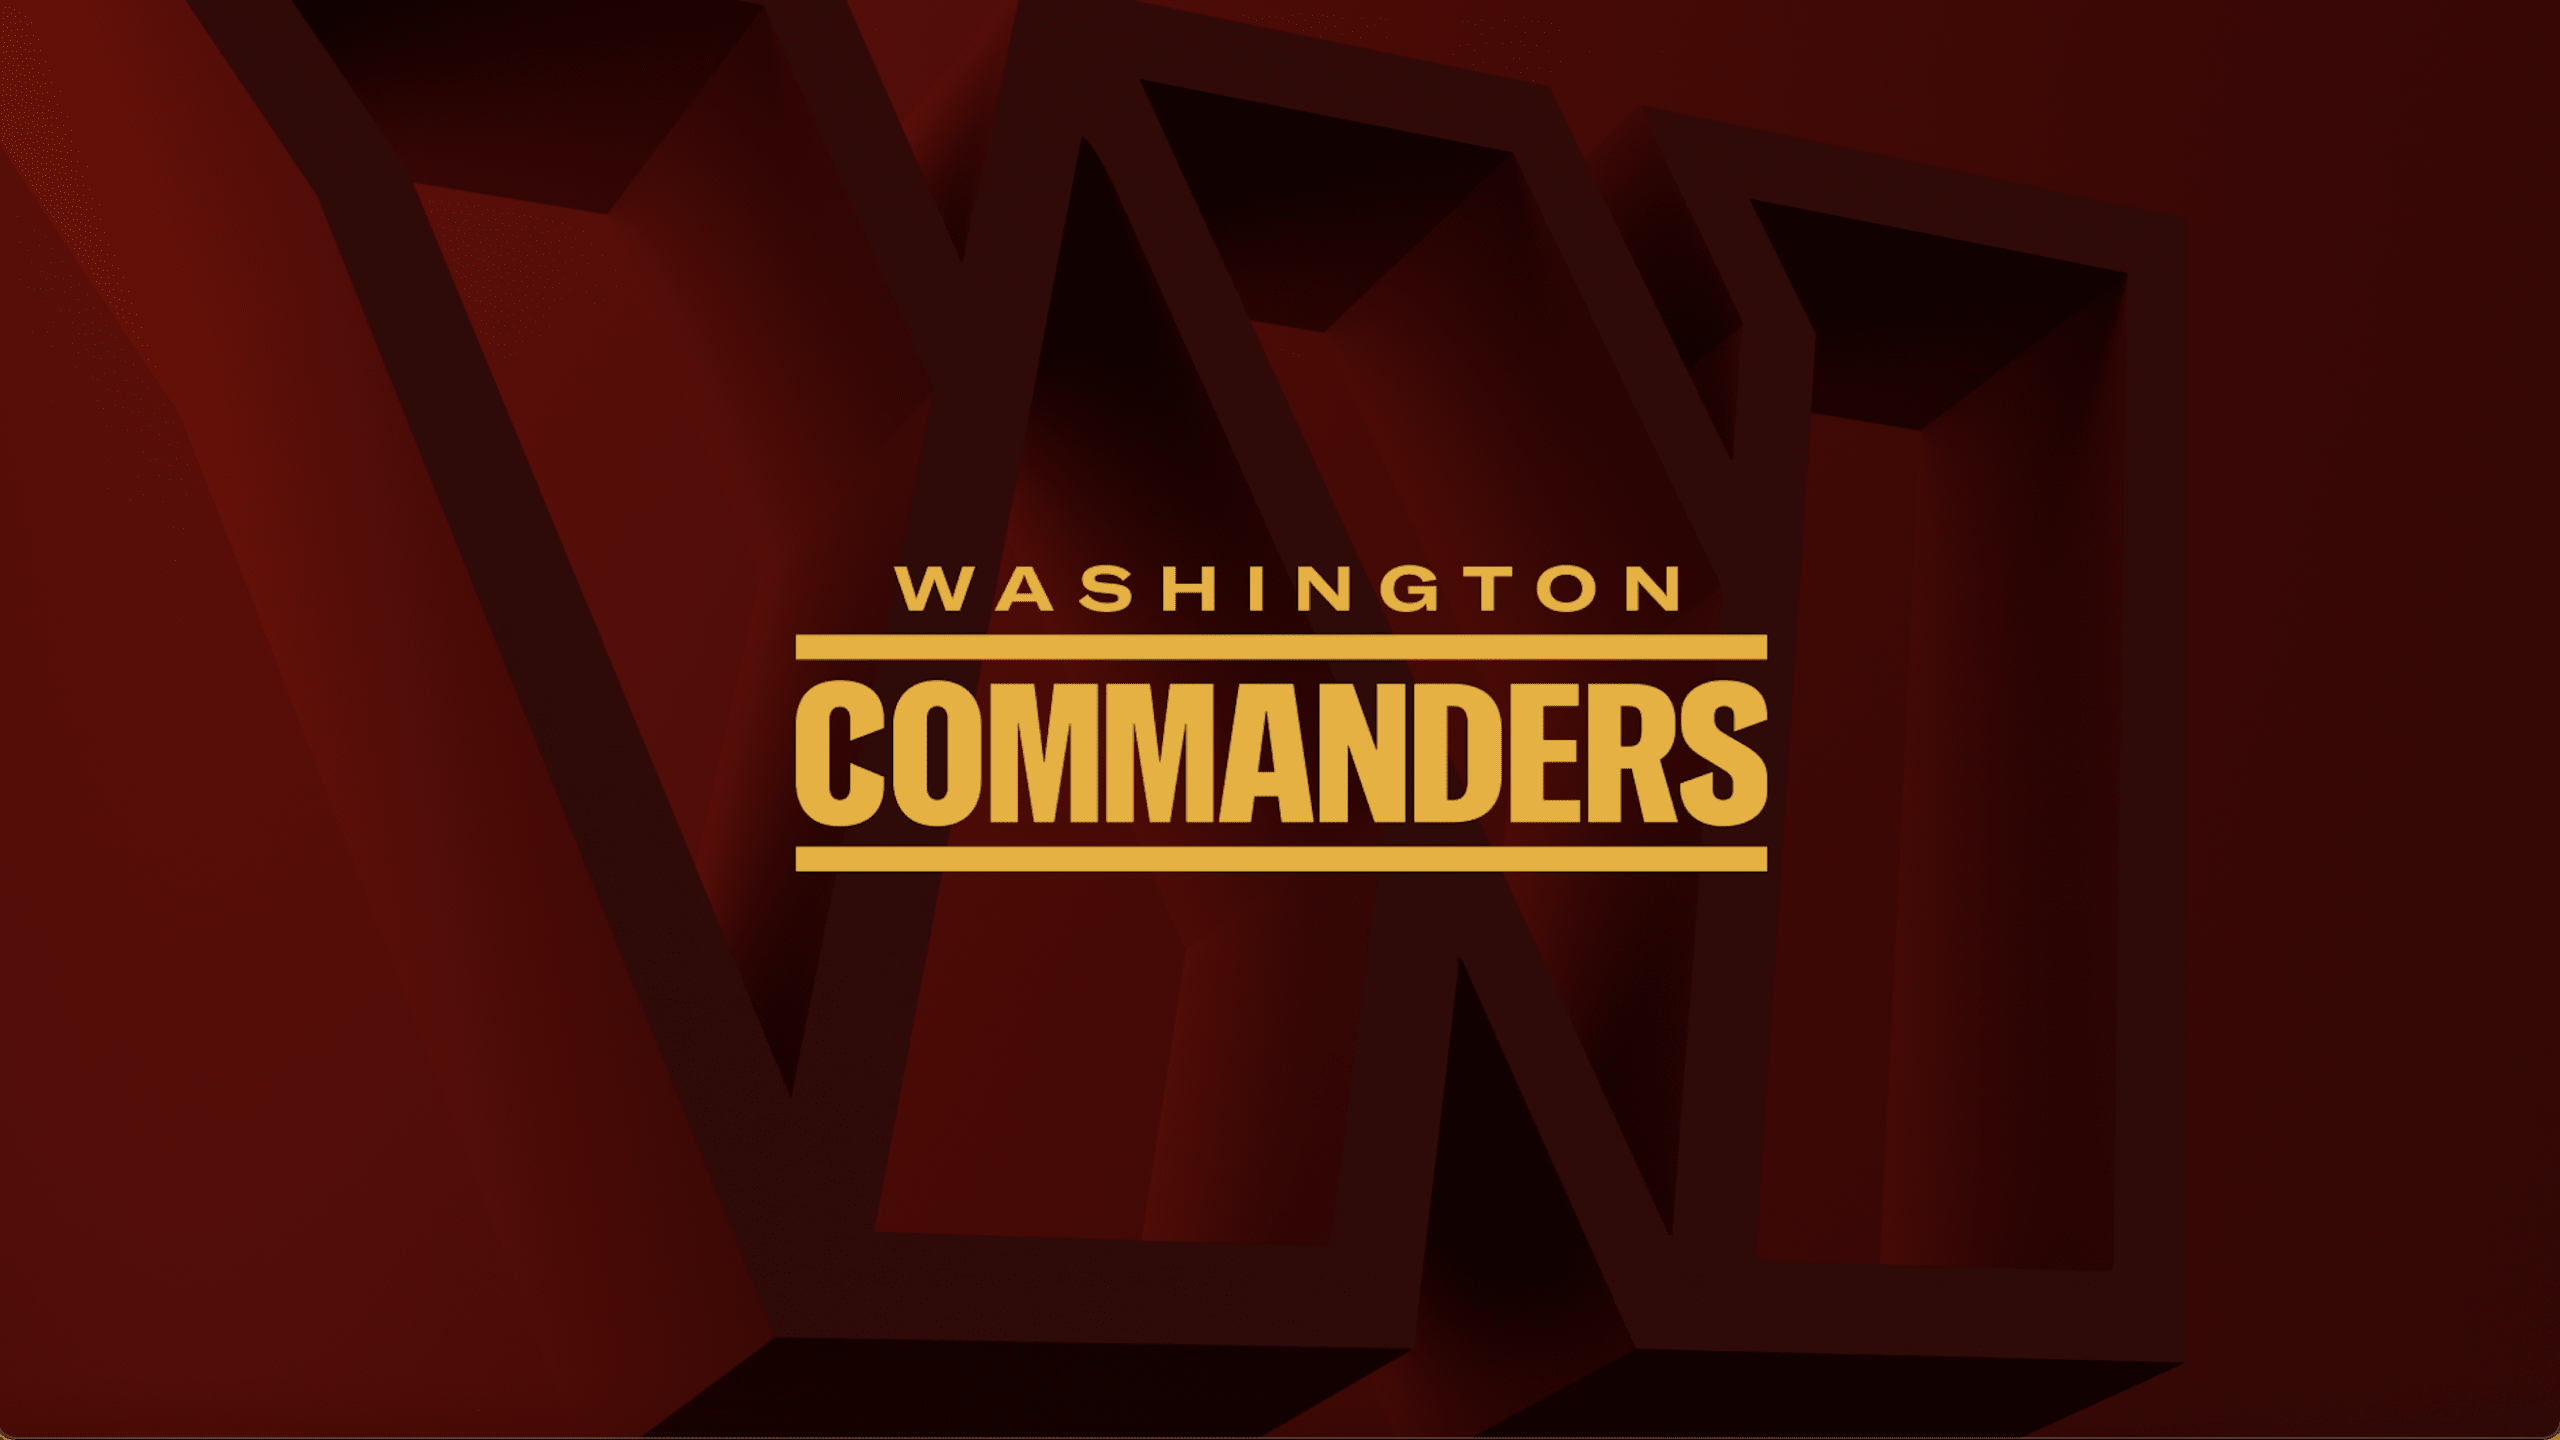 washington commander uniform